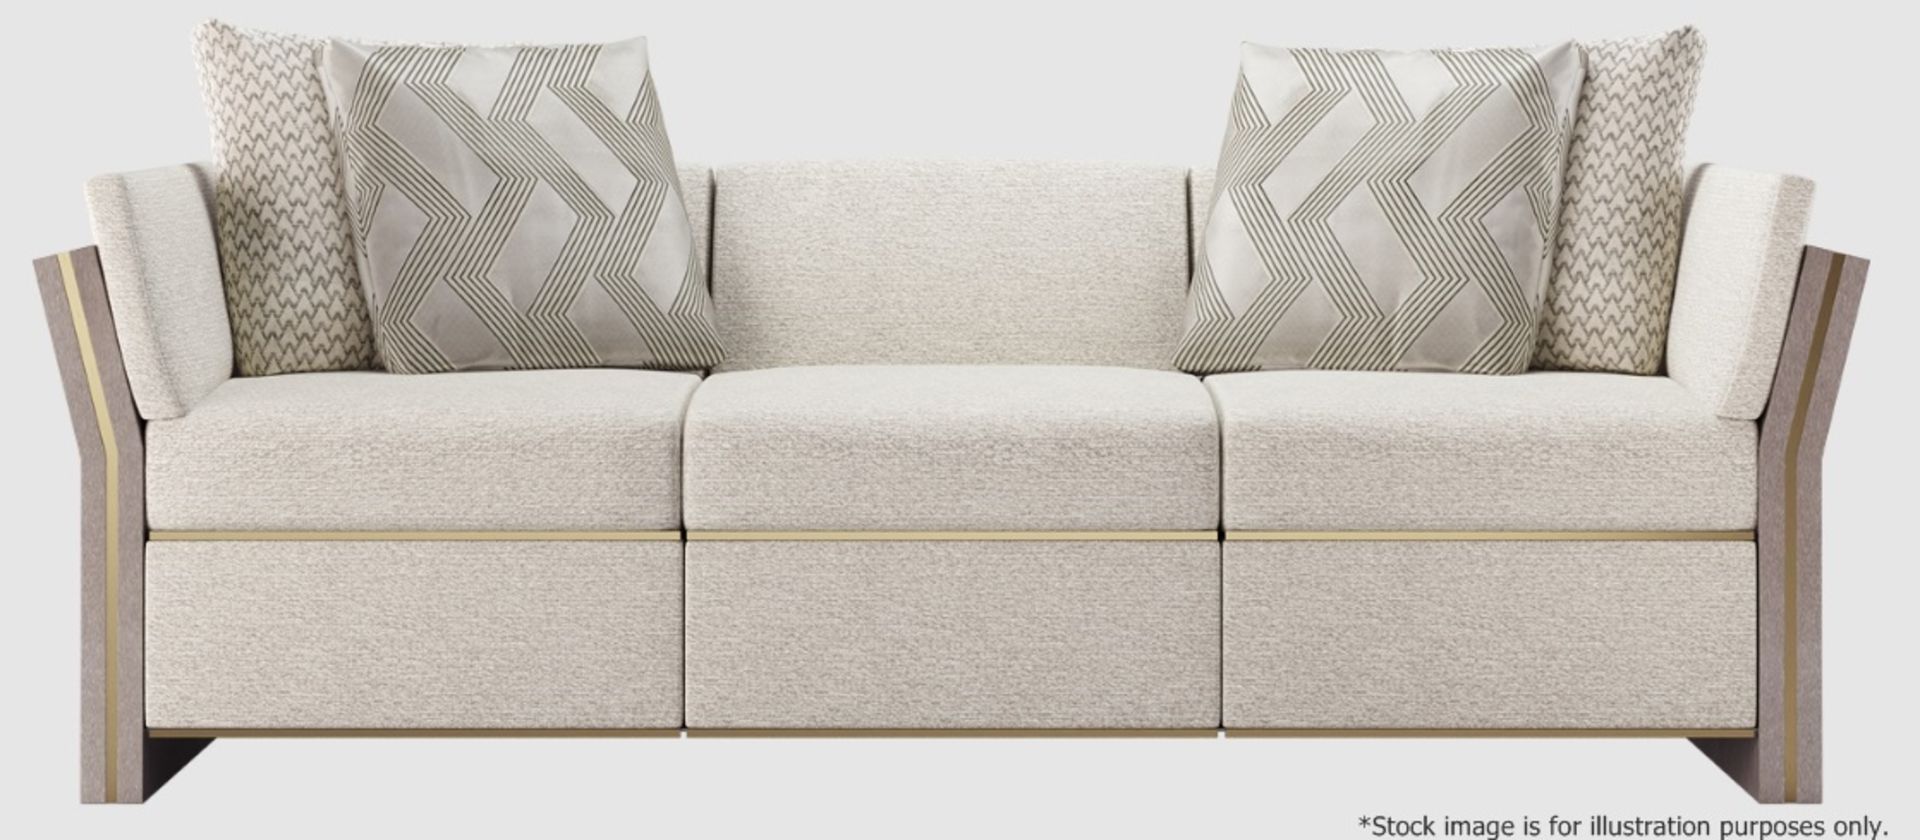 1 x FRATO 'Udaipur' 3 Seater Sofa With Custom Burgundy Velvet Upholstery - Original RRP £8,040 - Image 2 of 8